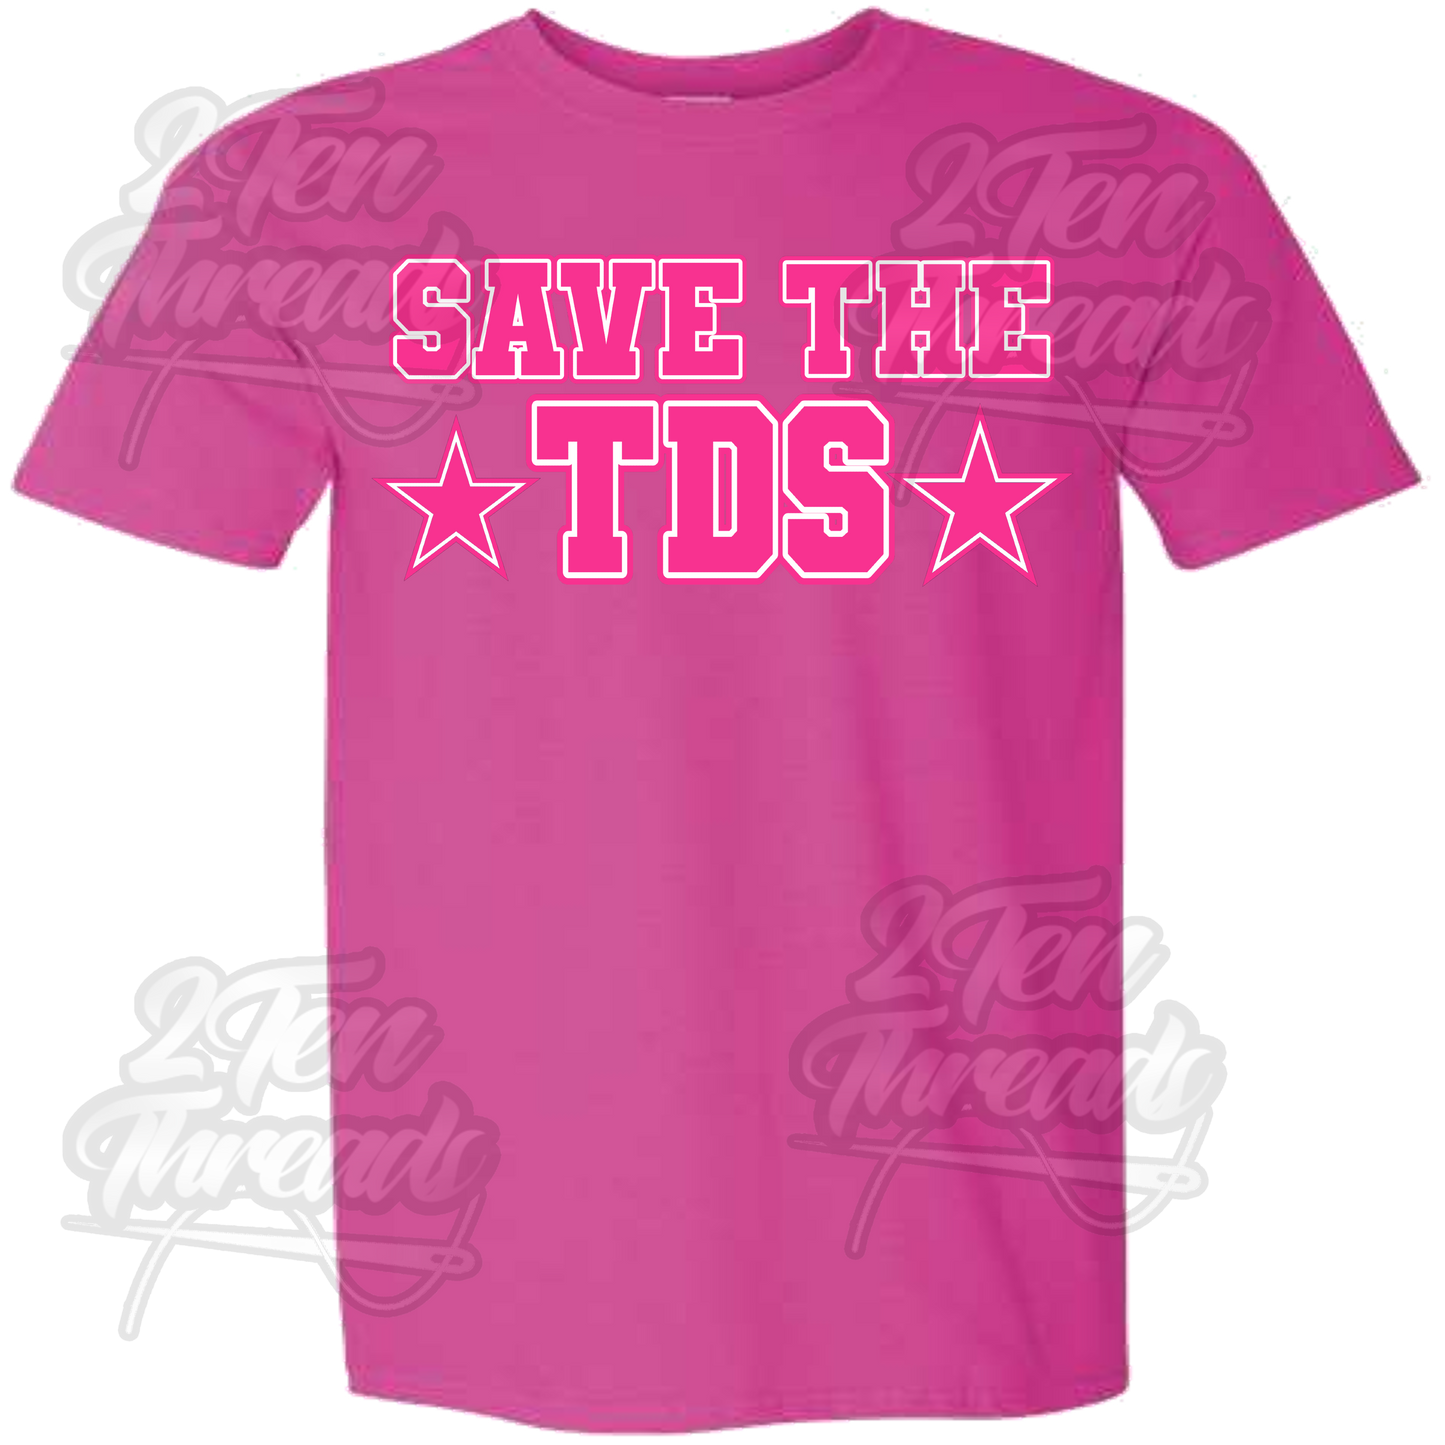 Save The TDS Shirt